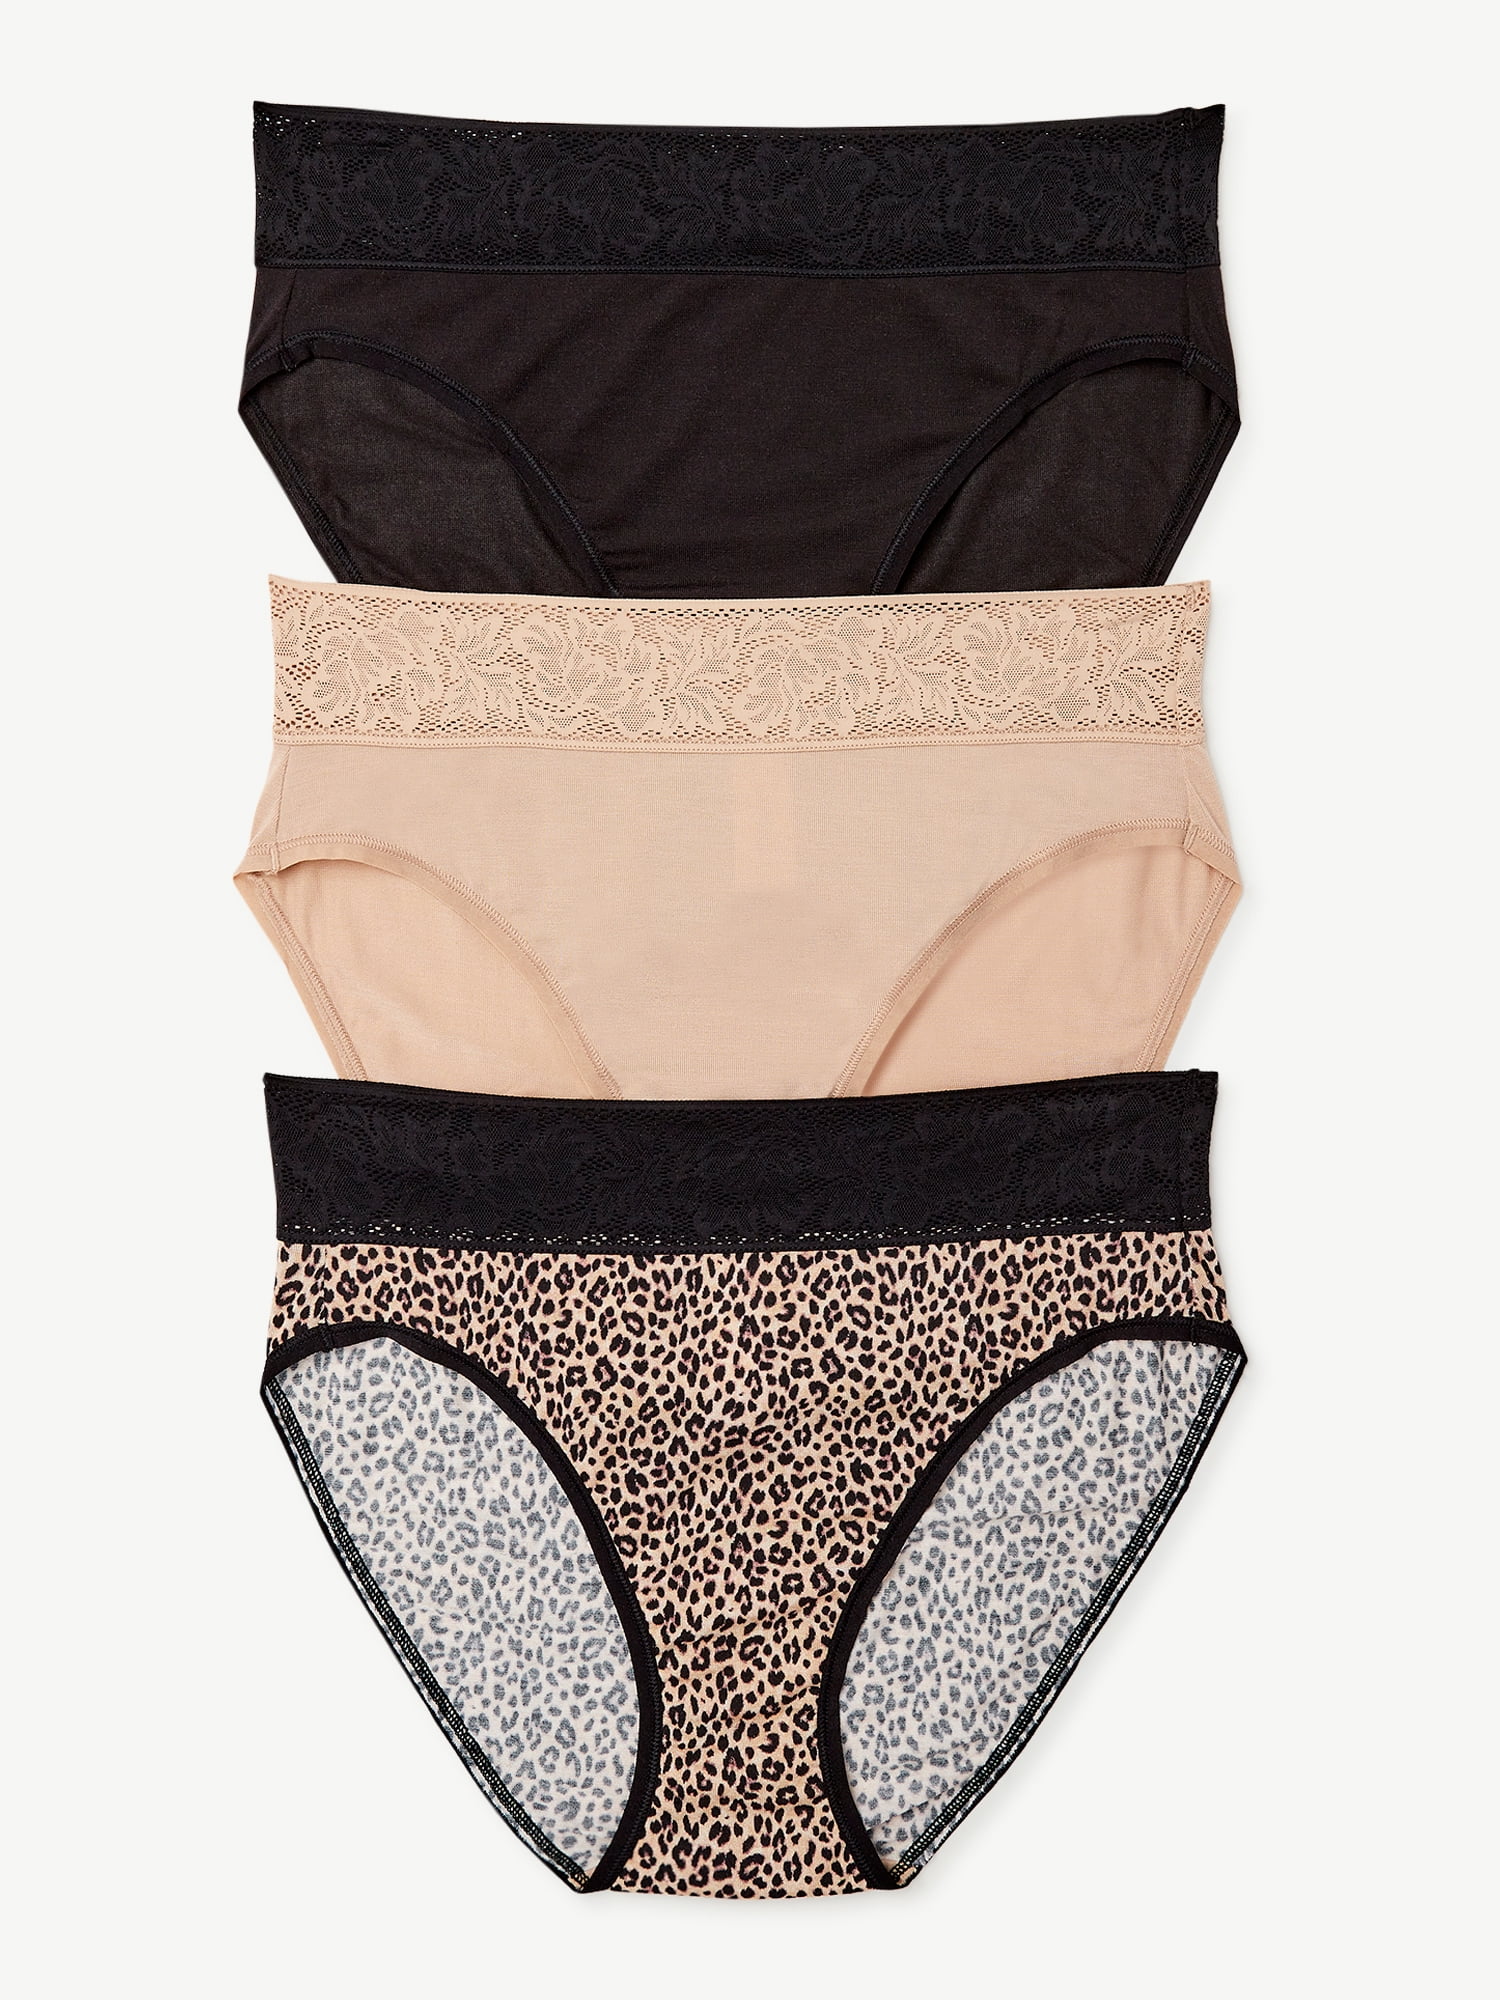 Women's Underwear Lace Trim Nylon Briefs Full Cut Carole Panties, 3-Pack 